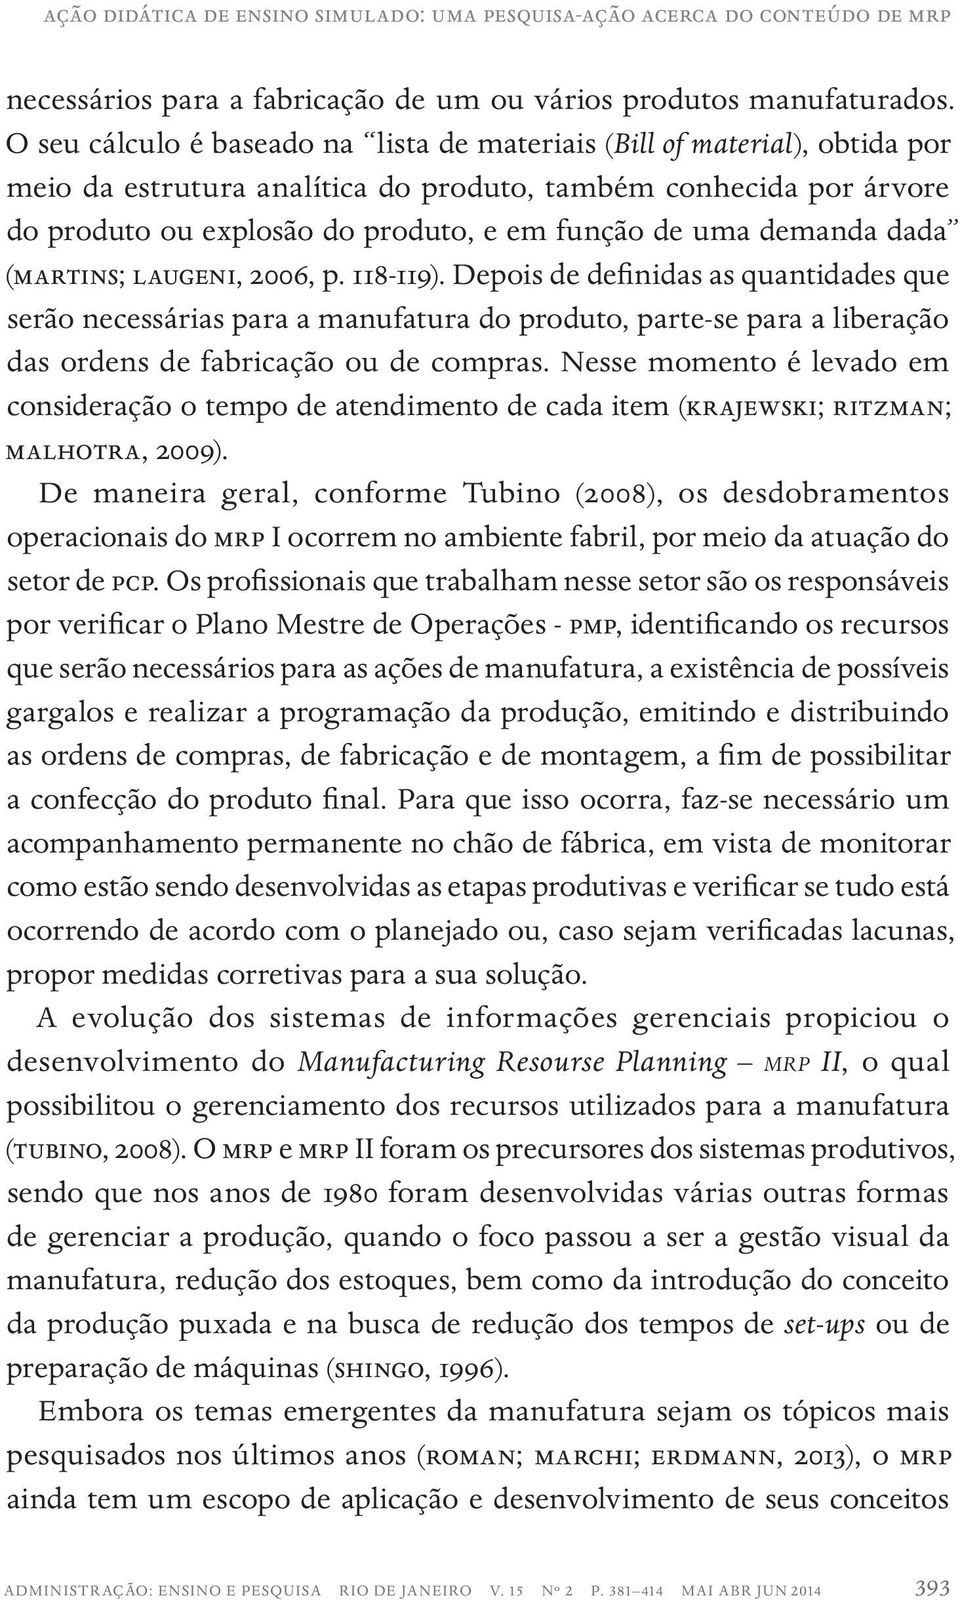 demanda dada (martins; laugeni, 2006, p. 118-119).